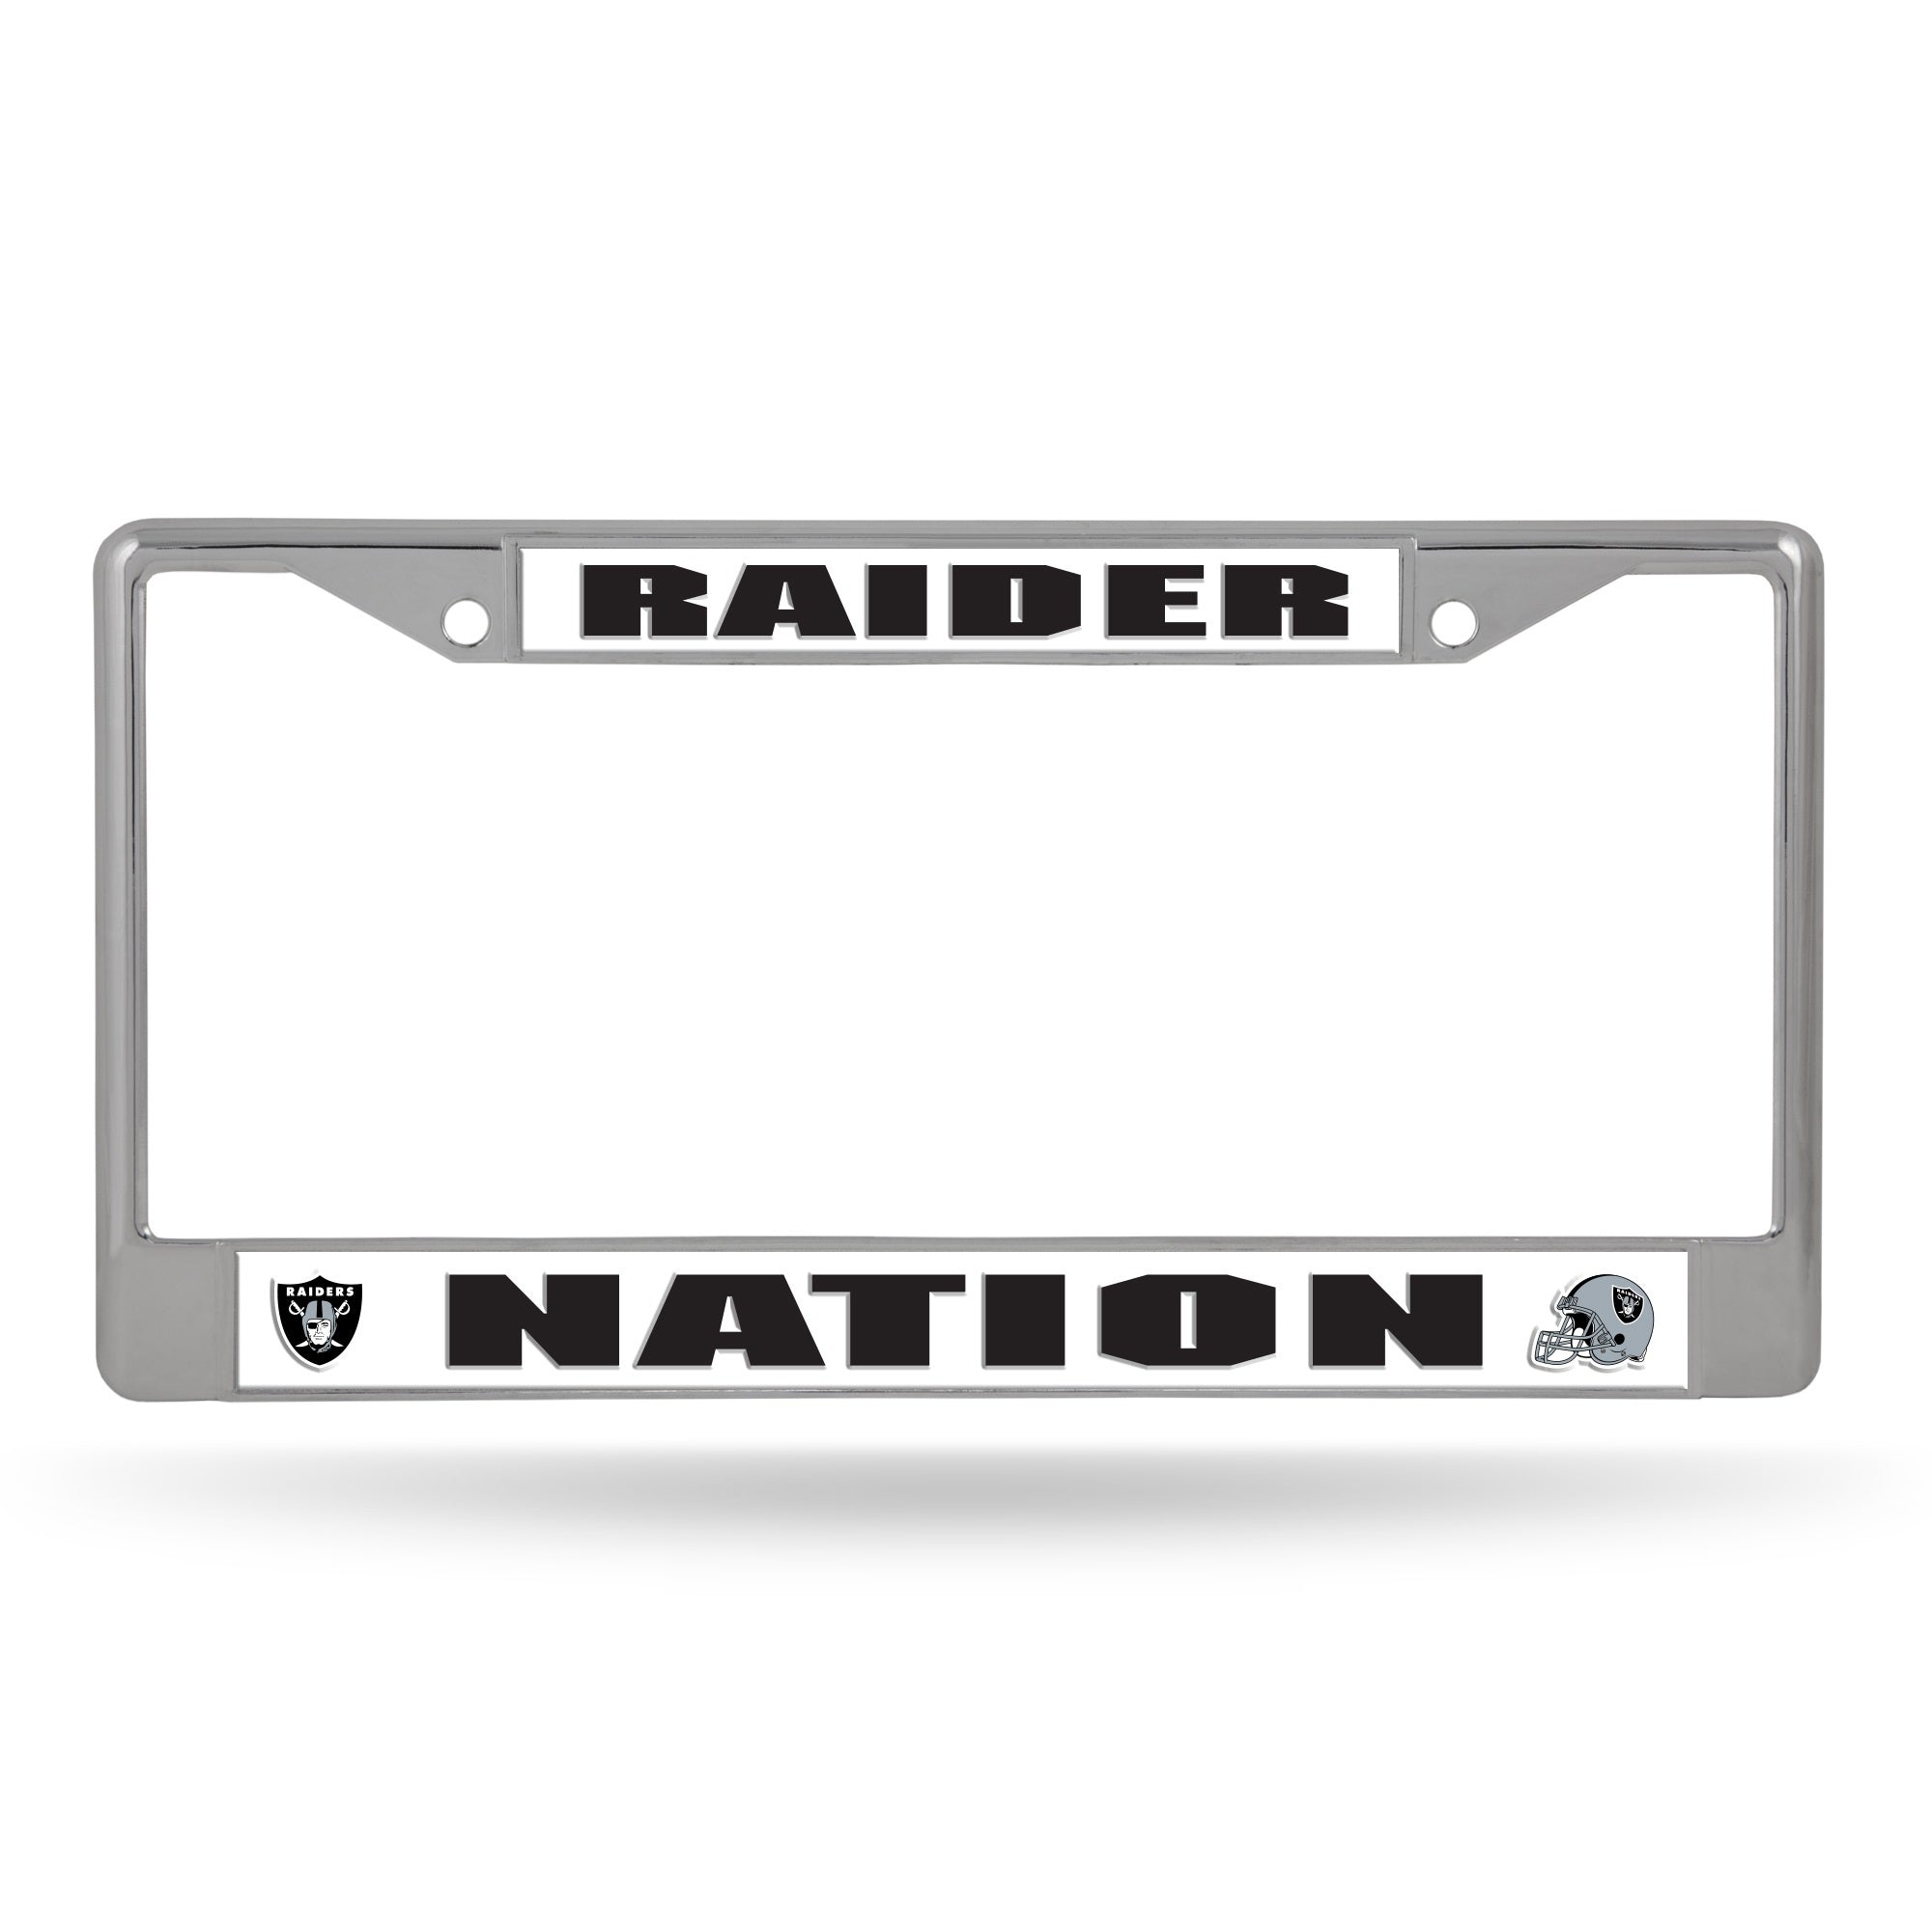 Las Vegas Raiders License Plate Frame Chrome Silver Raider Nation - Team Spirit Store USA 